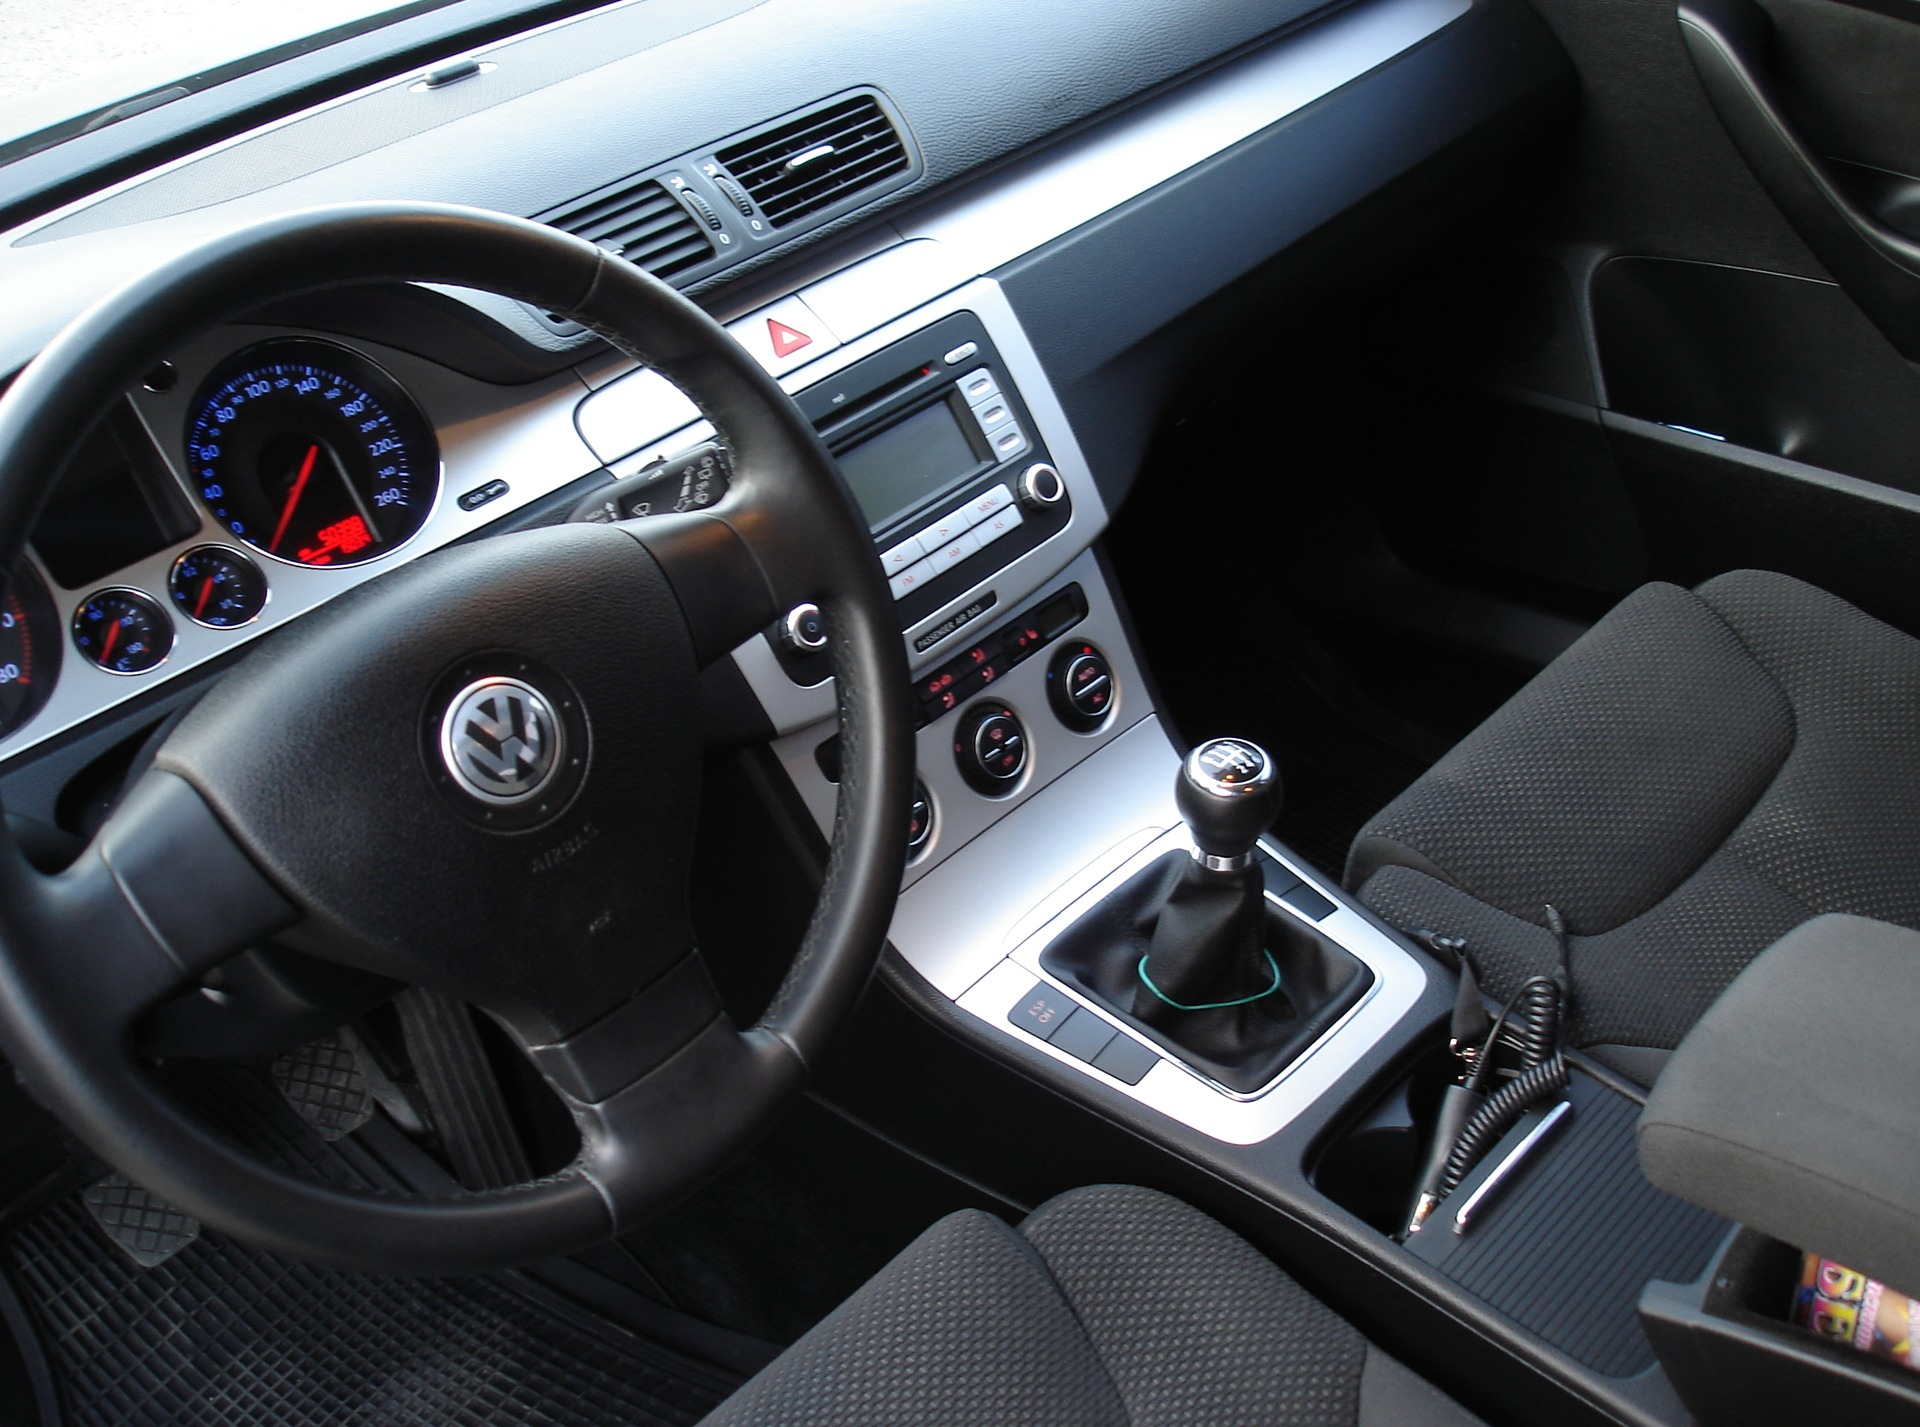 Фольксваген б6 1.6. VW Passat b6 Interior. VW Passat b6 салон. Фольксваген Пассат б6 2008 салон. WV Passat b6 салон.